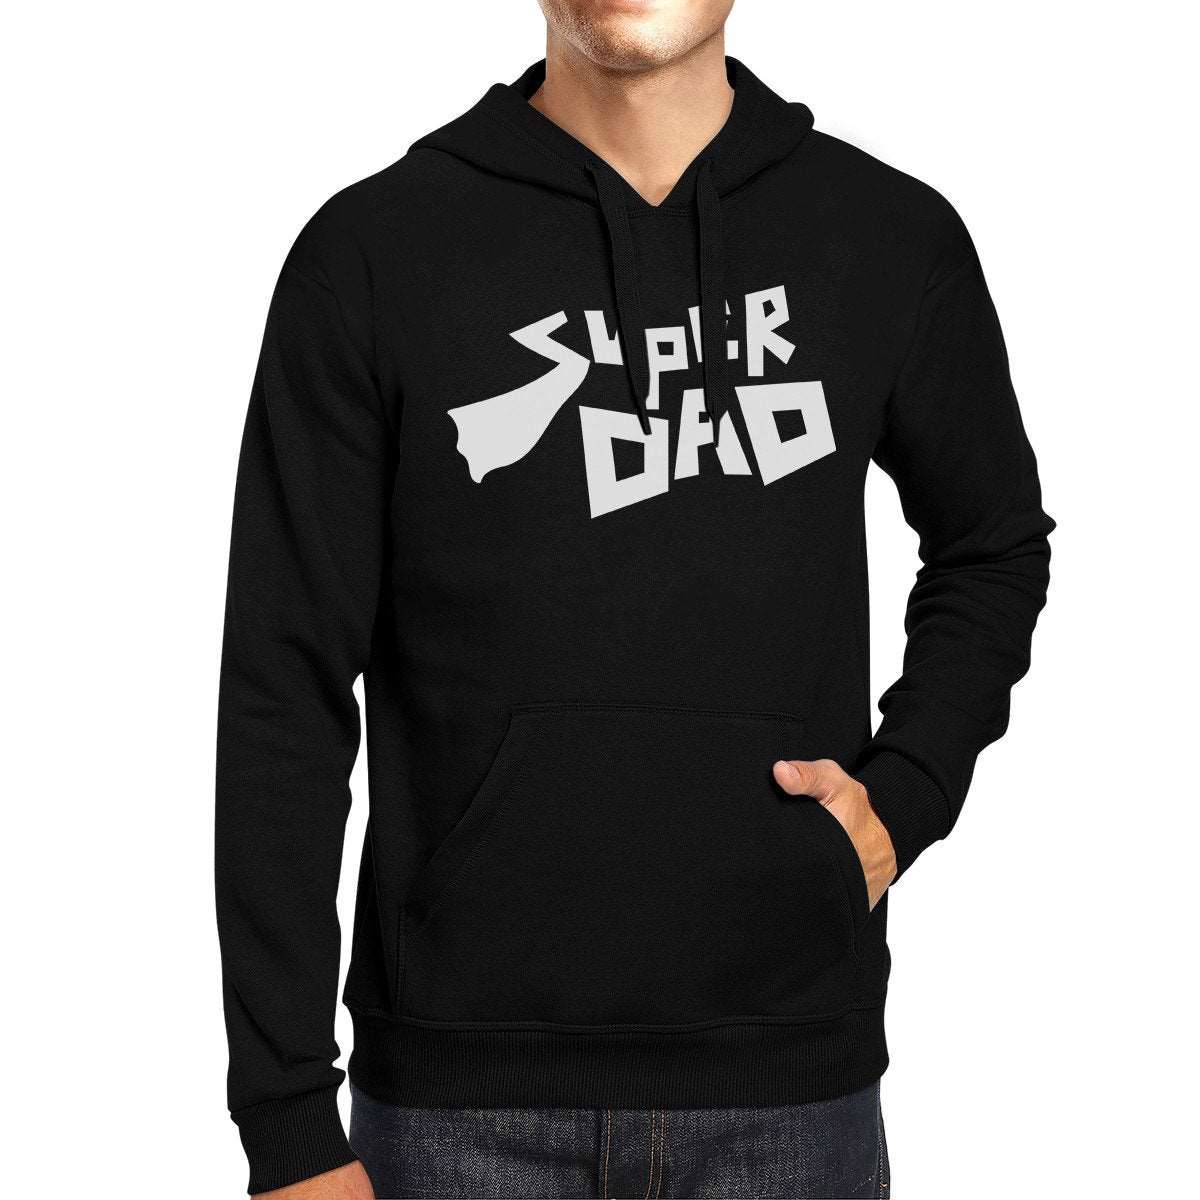 Nfin8 Hero Dad Super Dad Funny Graphic Hoodie